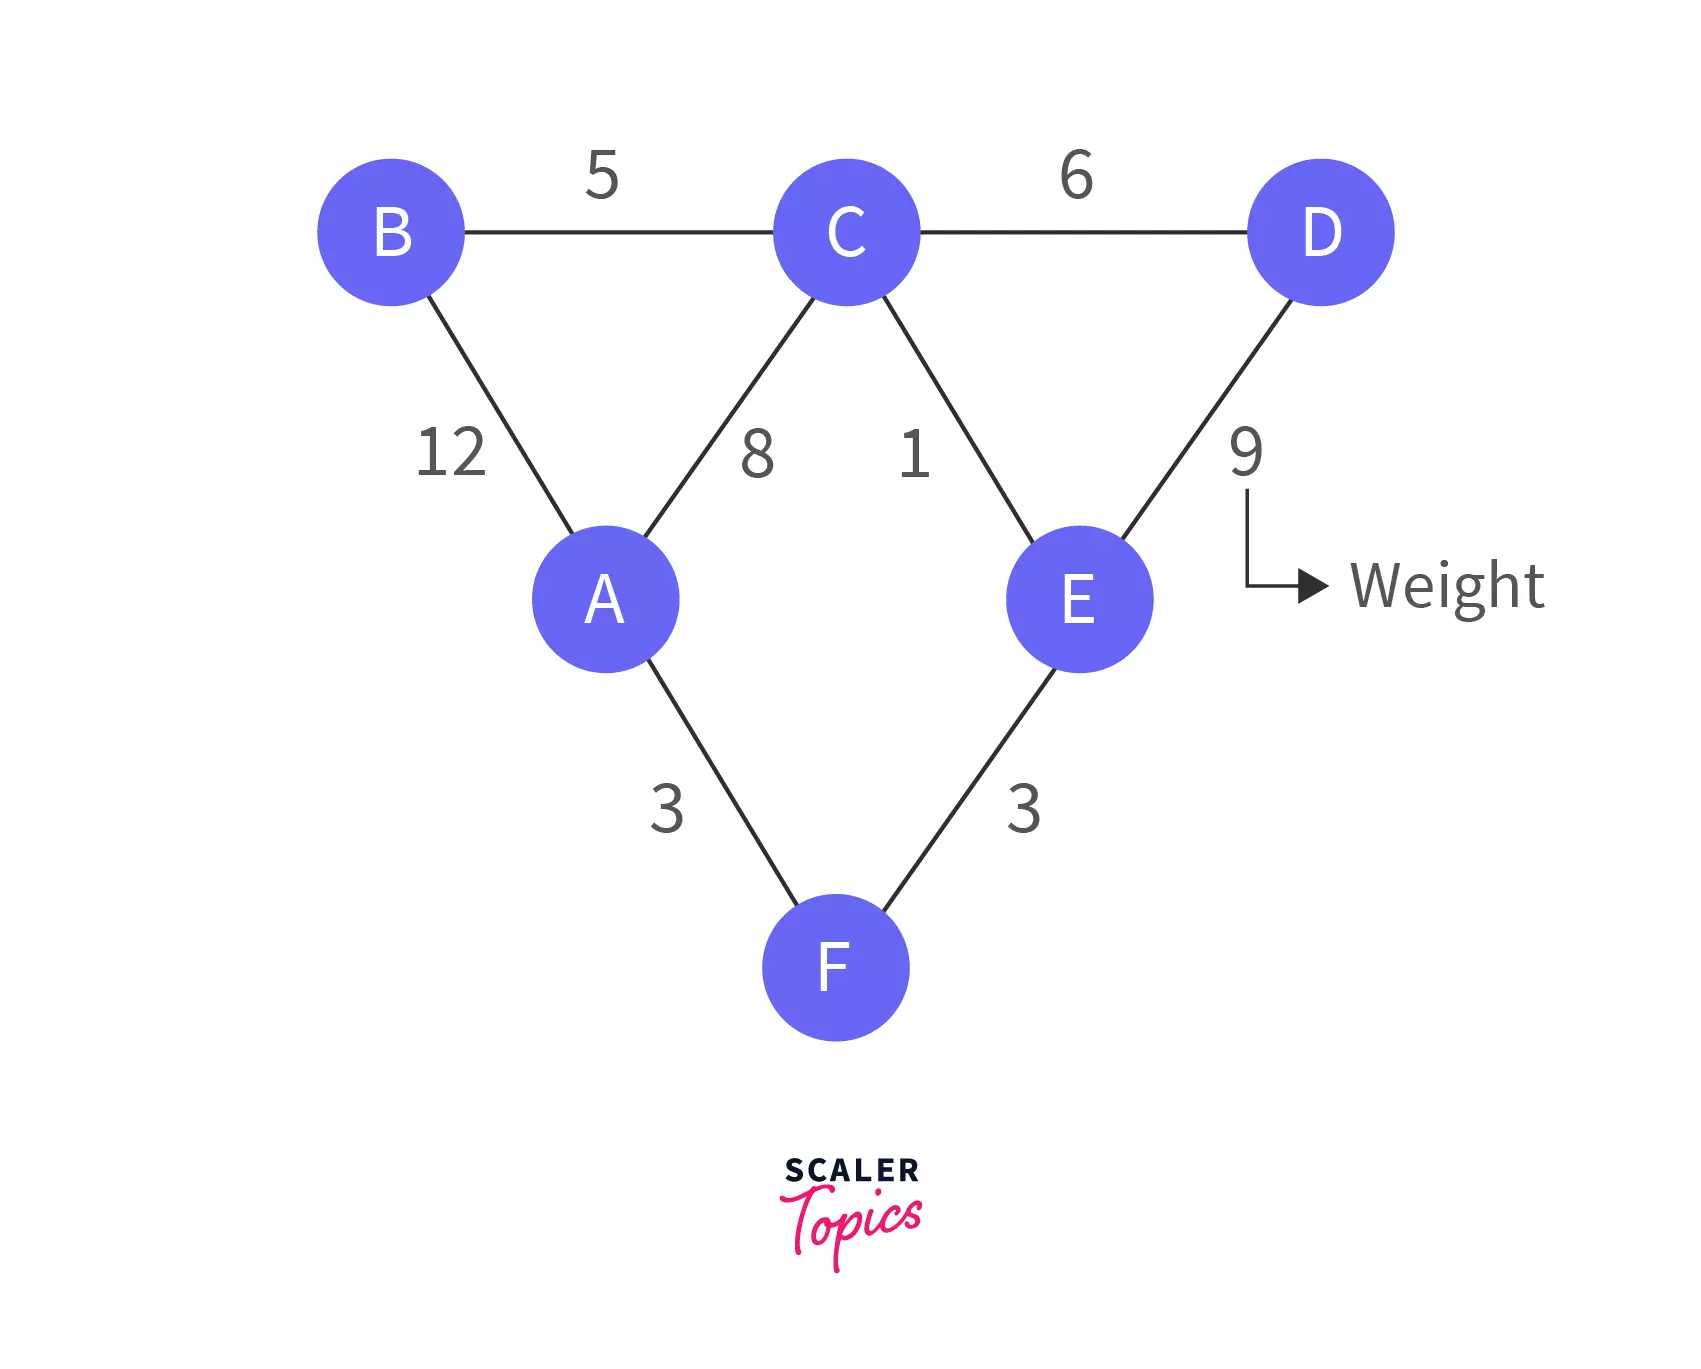 adding random weights prims algorithm